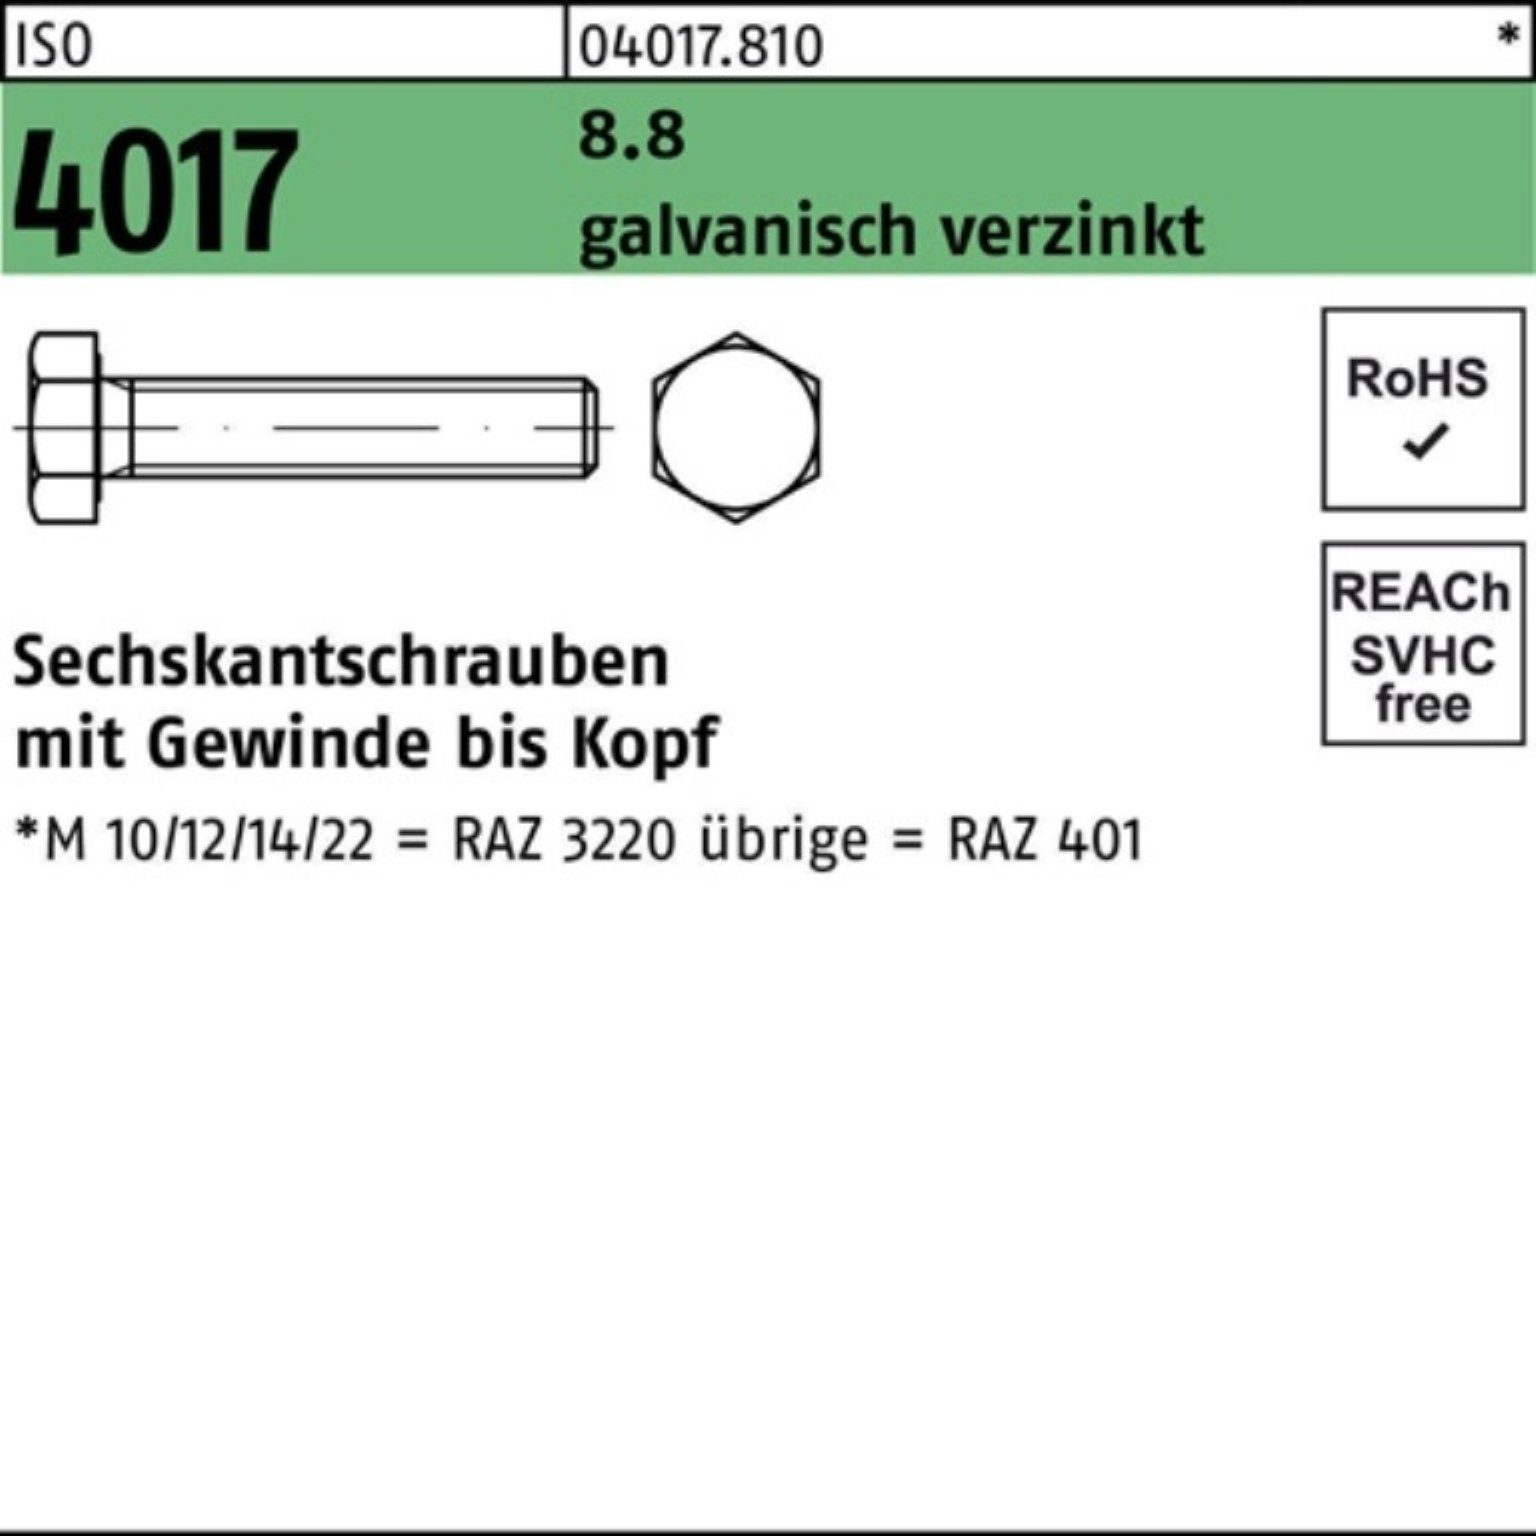 Bufab Sechskantschraube 100er Pack galv.verz. St M30x Sechskantschraube 110 1 4017 VG ISO 8.8